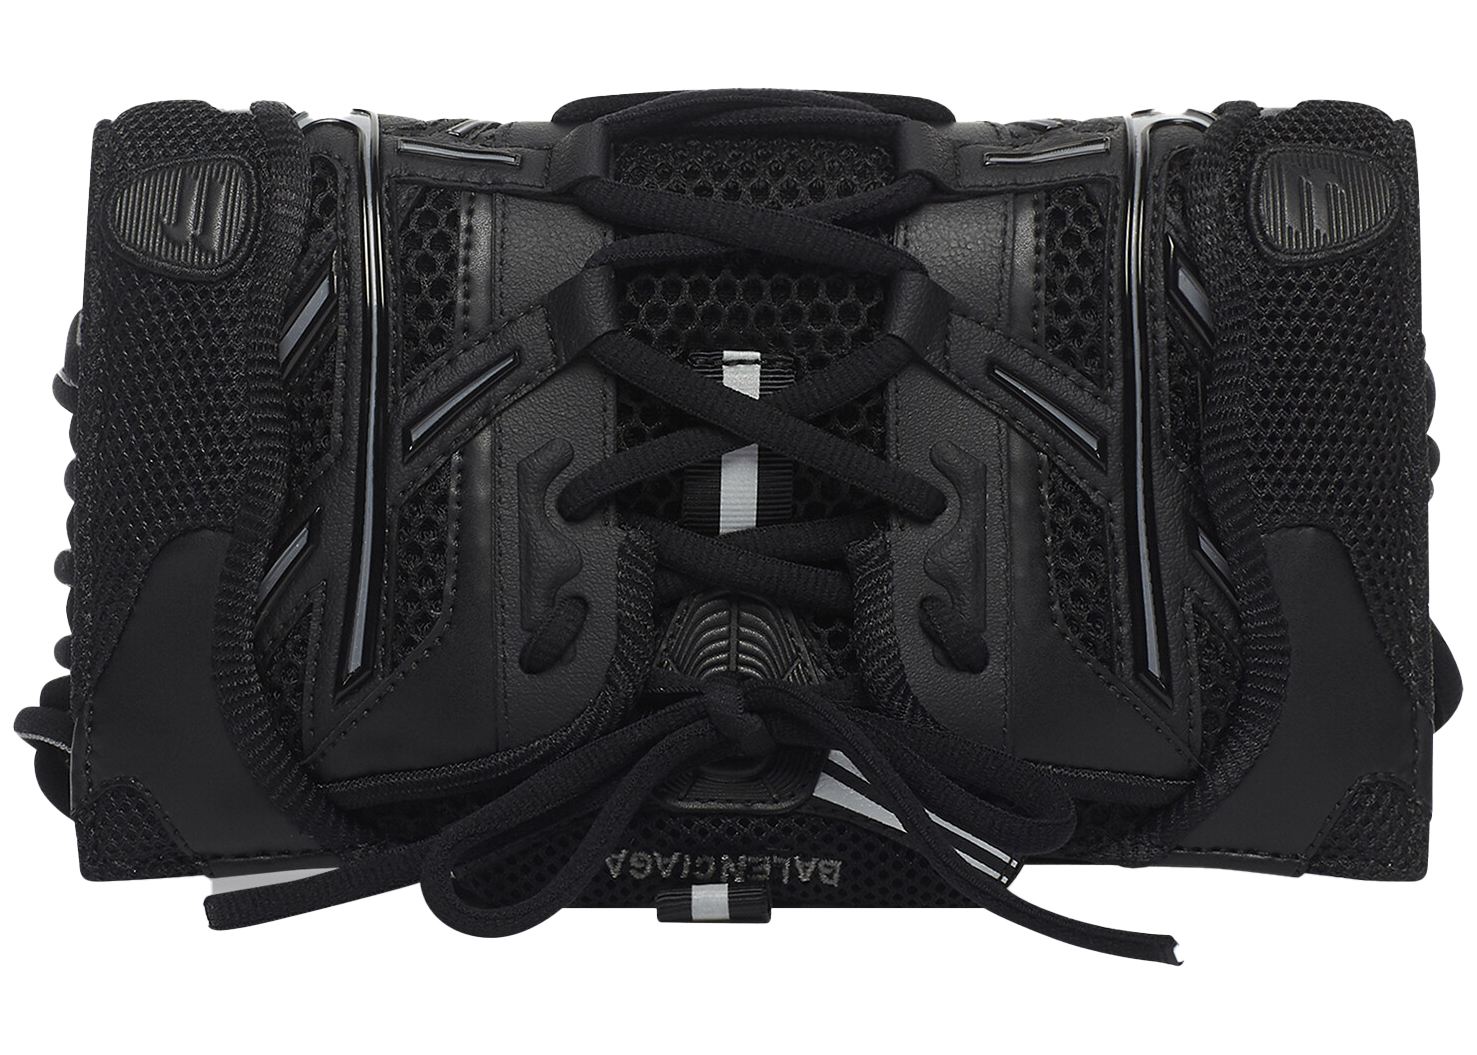 Balenciaga SneakerHead Phone Holder Black